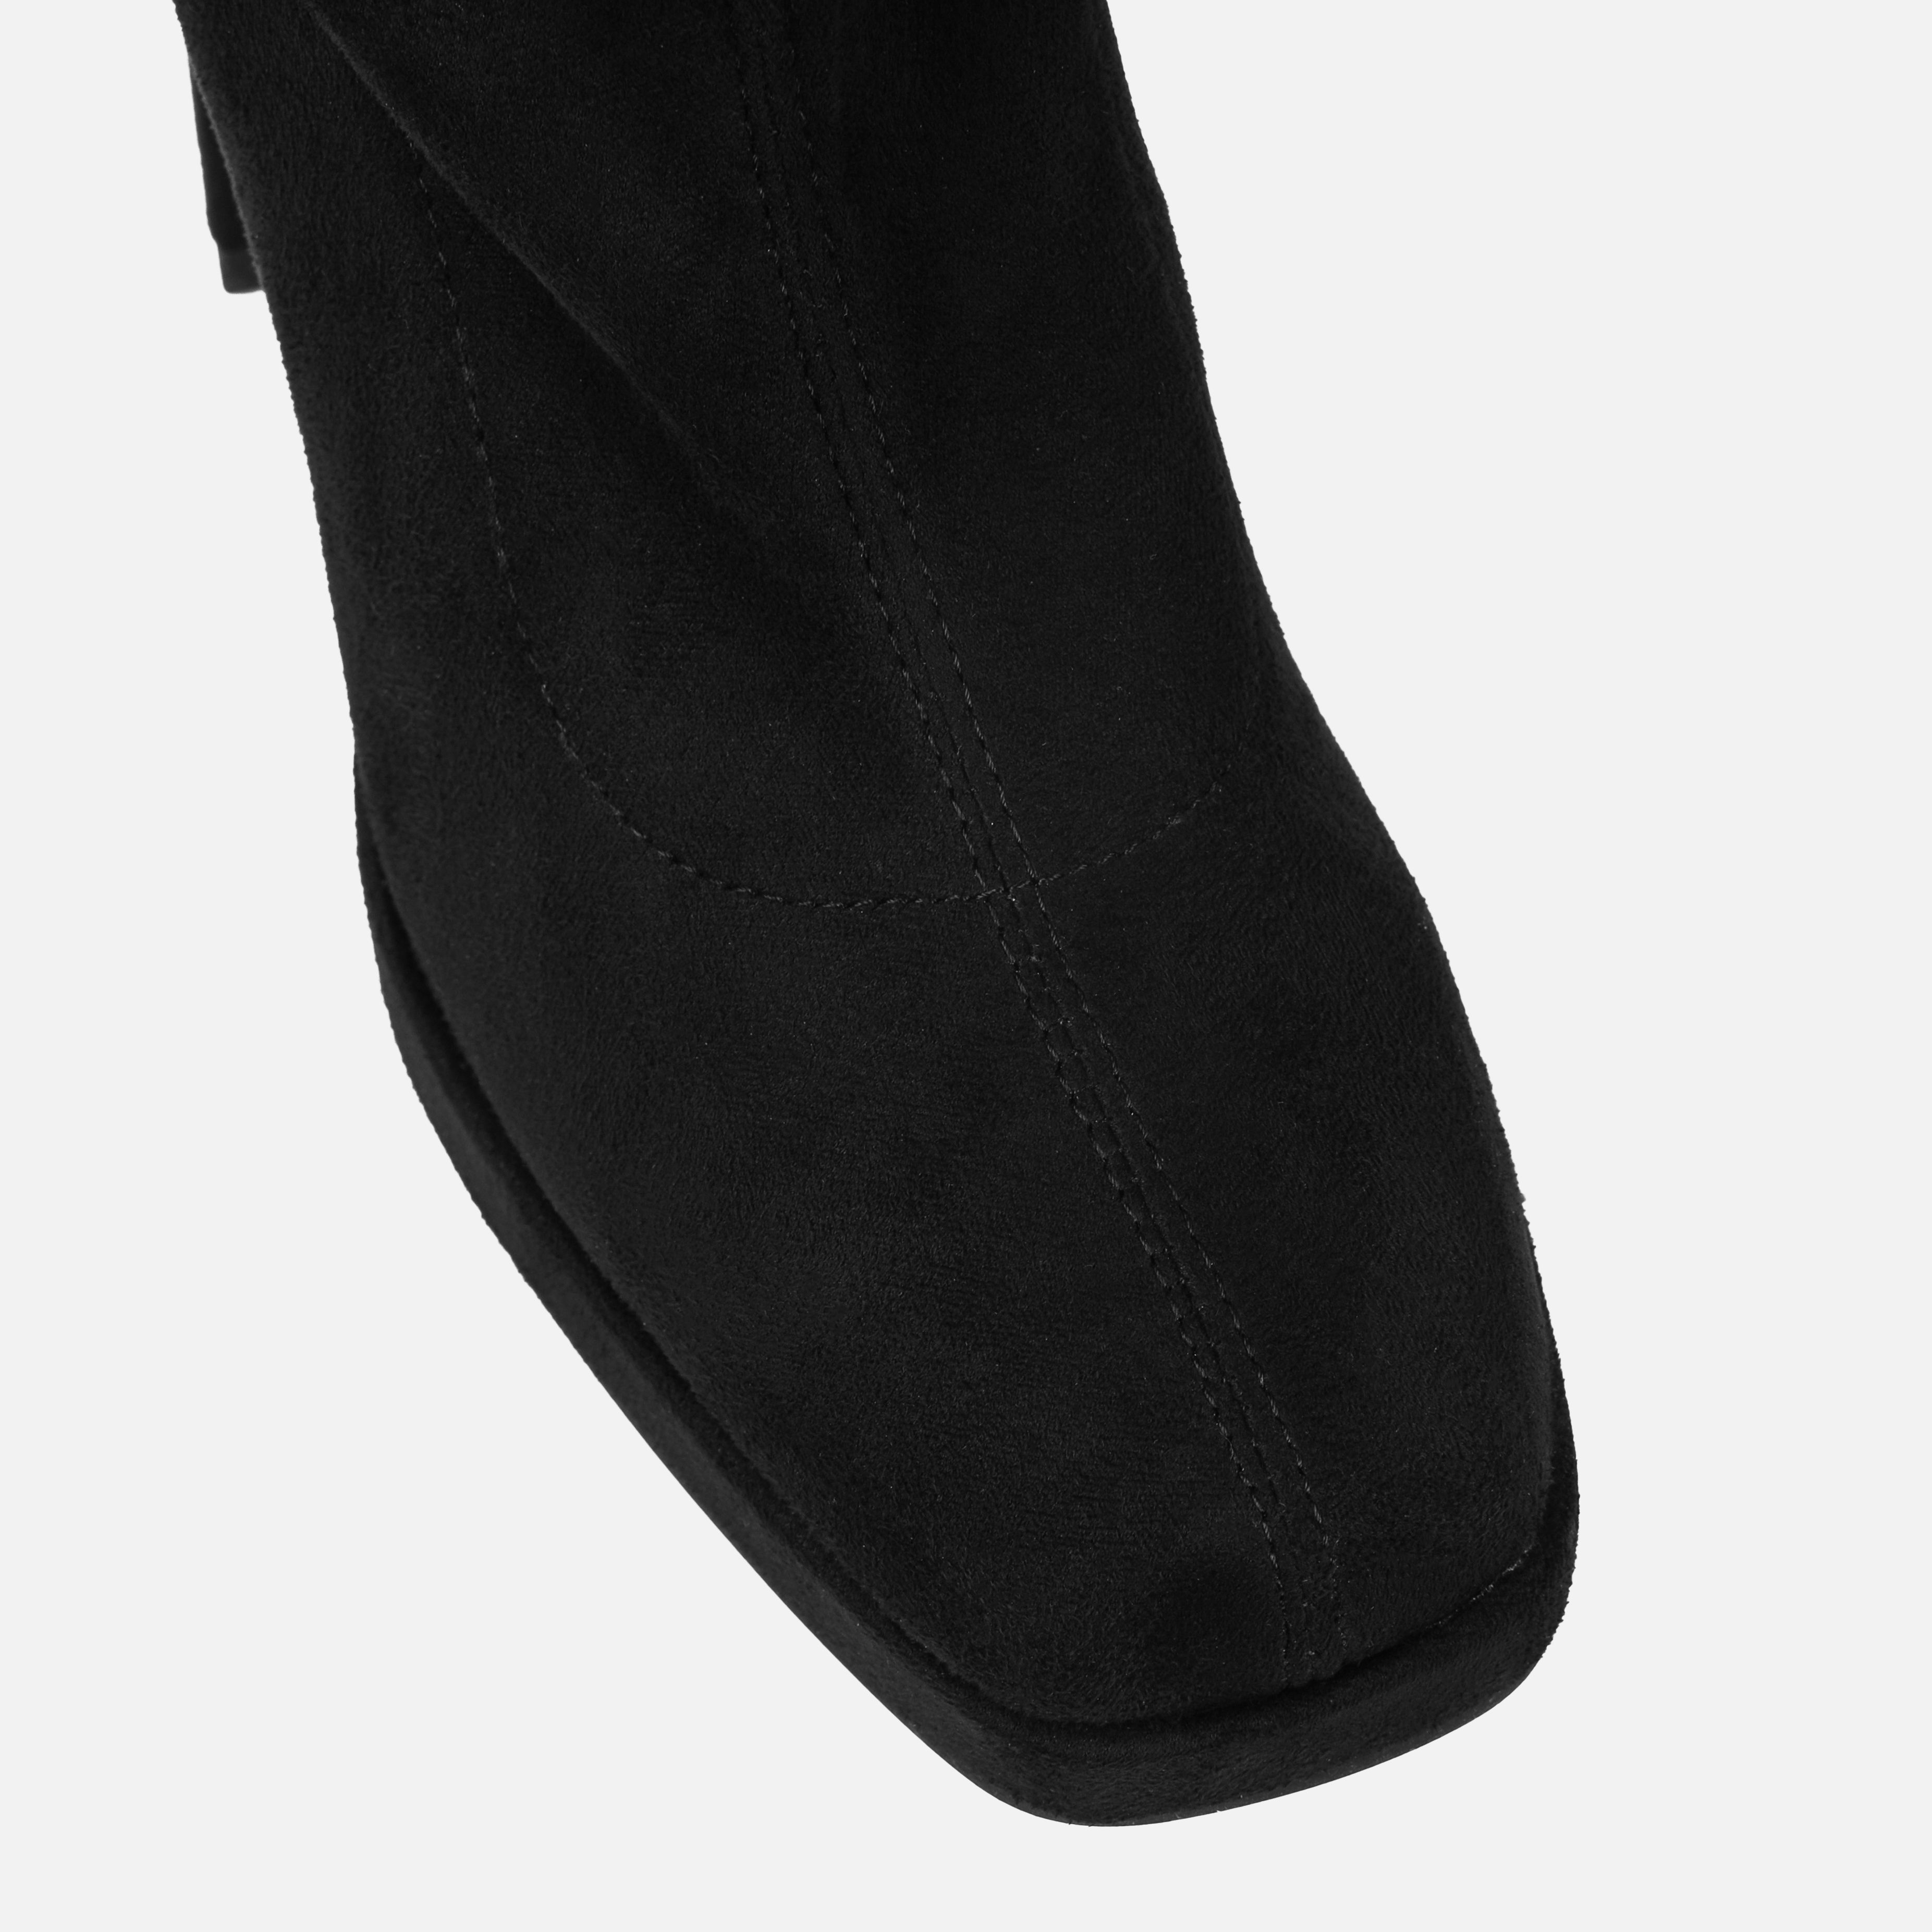 Aviva Black Microfiber Platform Block Heel Thigh High Boots | SIMMI London